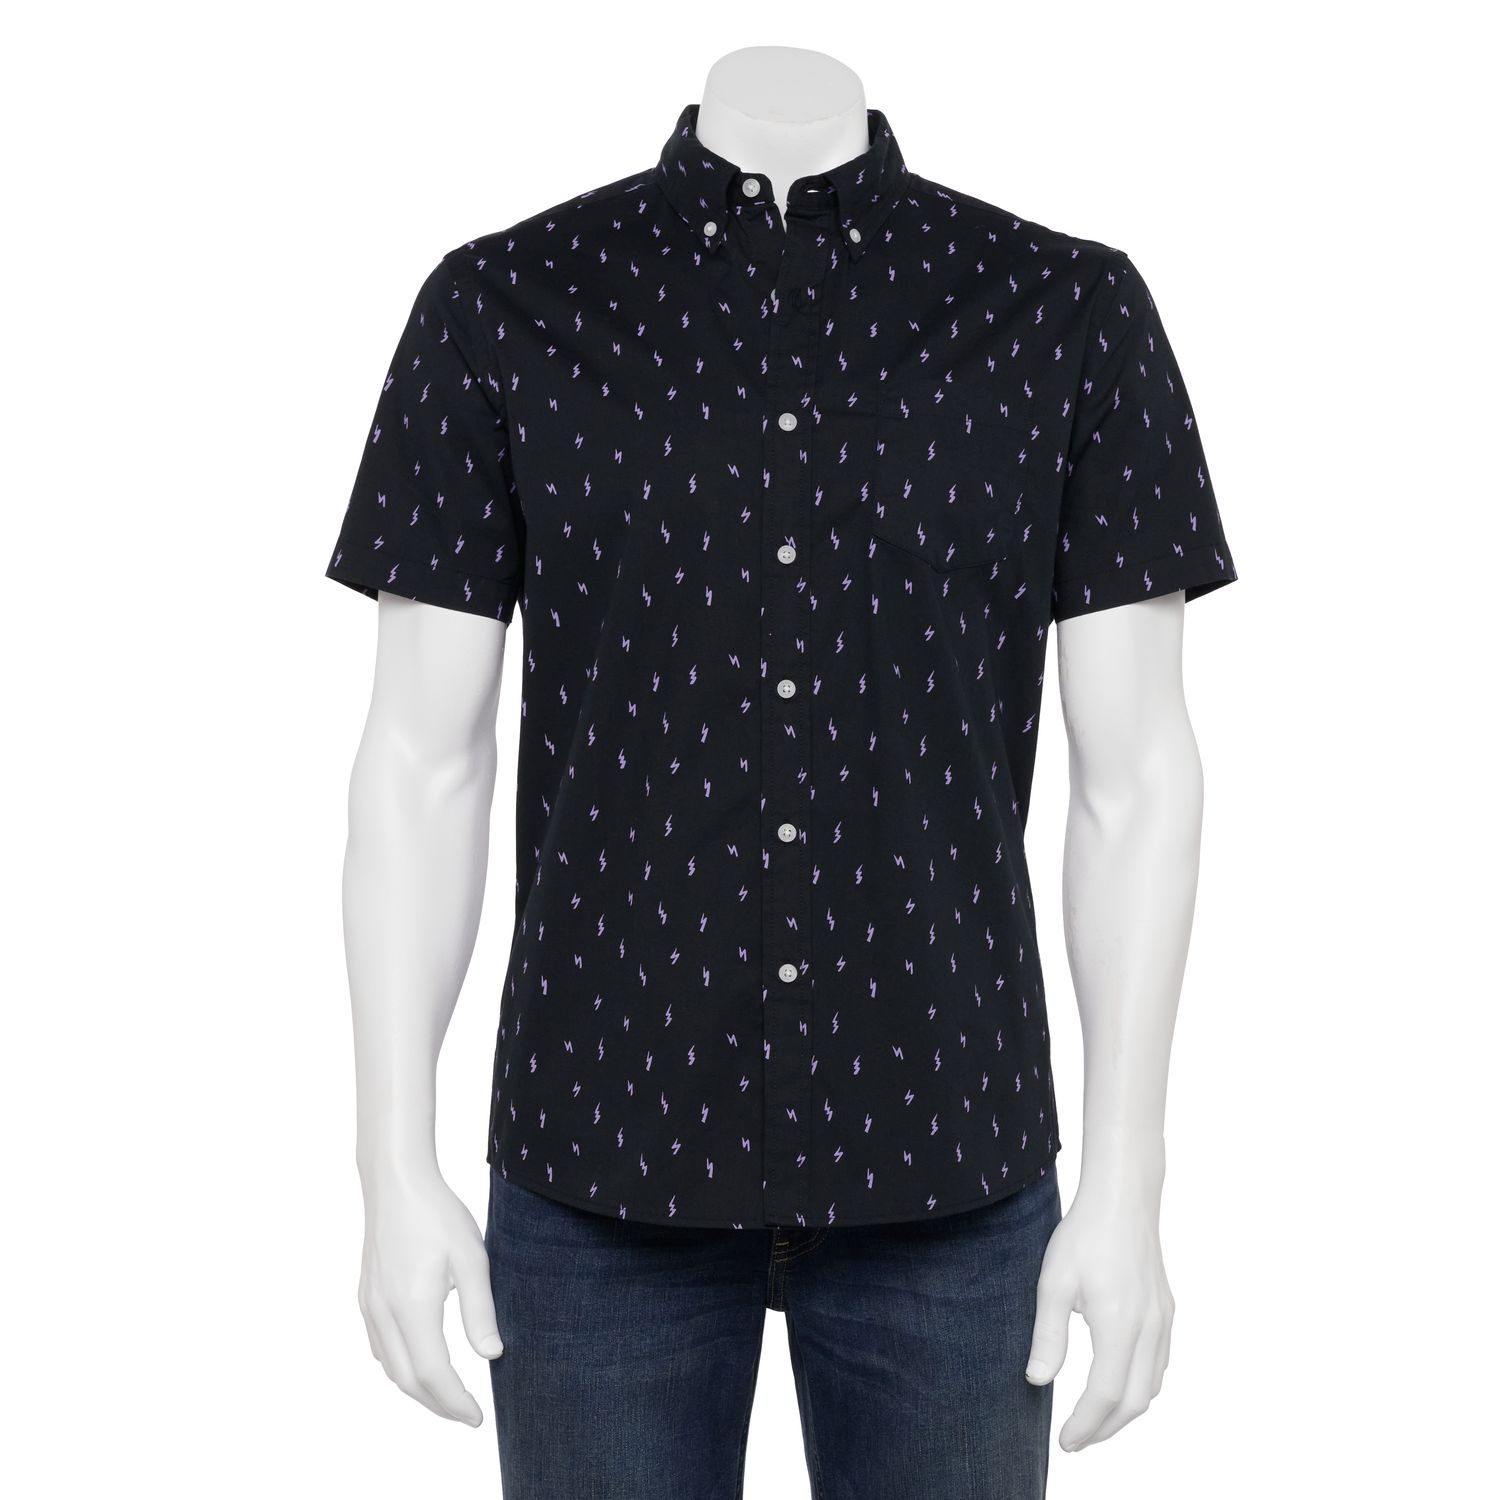 Mens Black Button Up Shirts | Kohl's